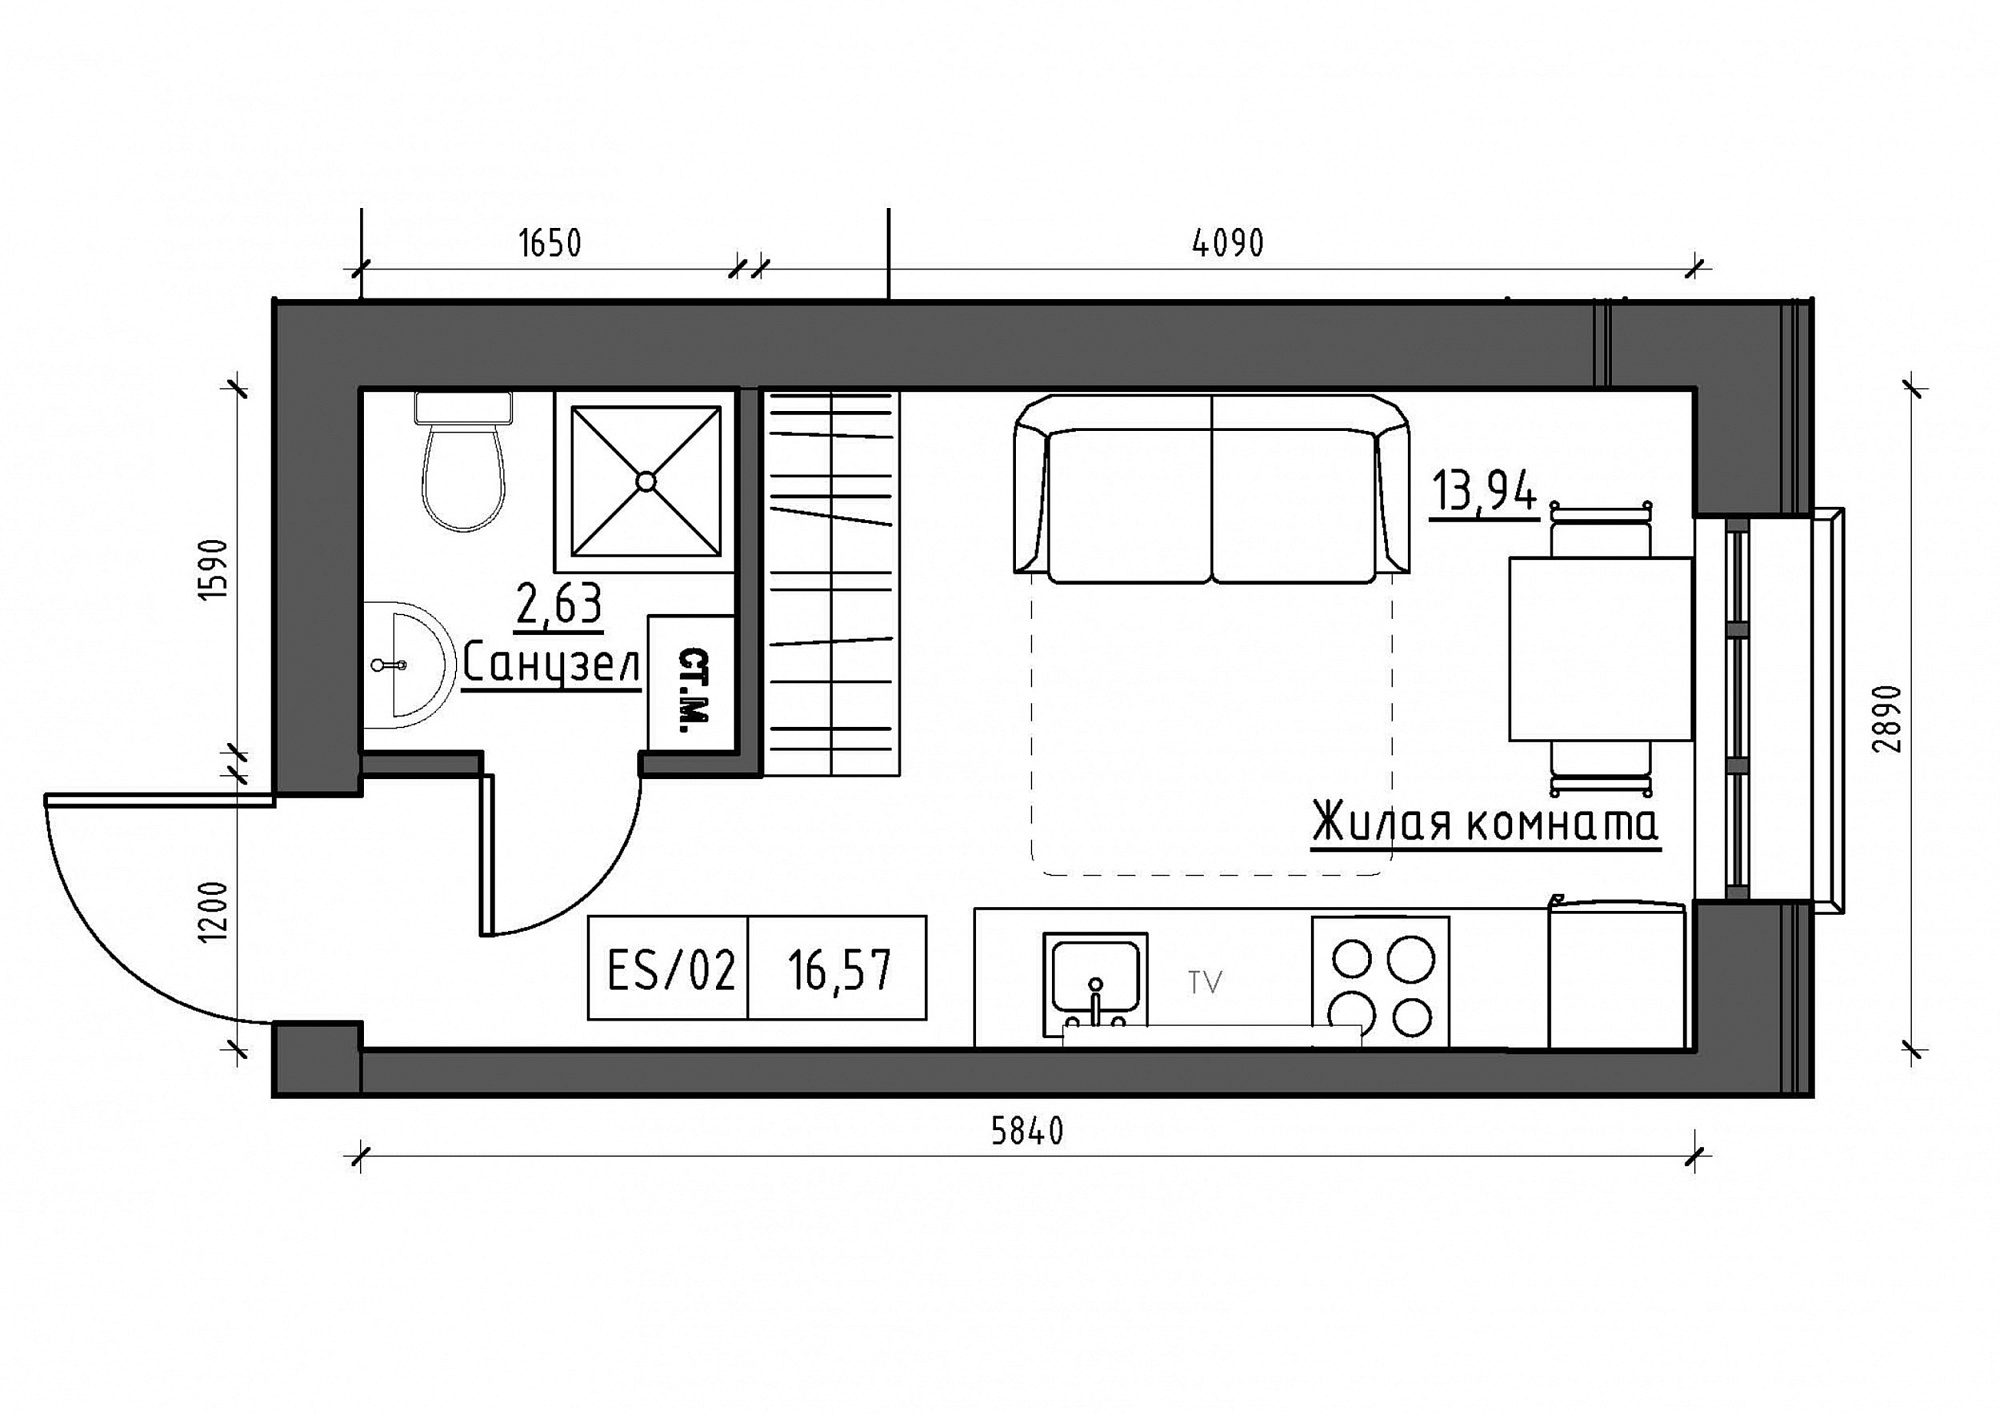 Planning Smart flats area 16.57m2, KS-011-04/0005.